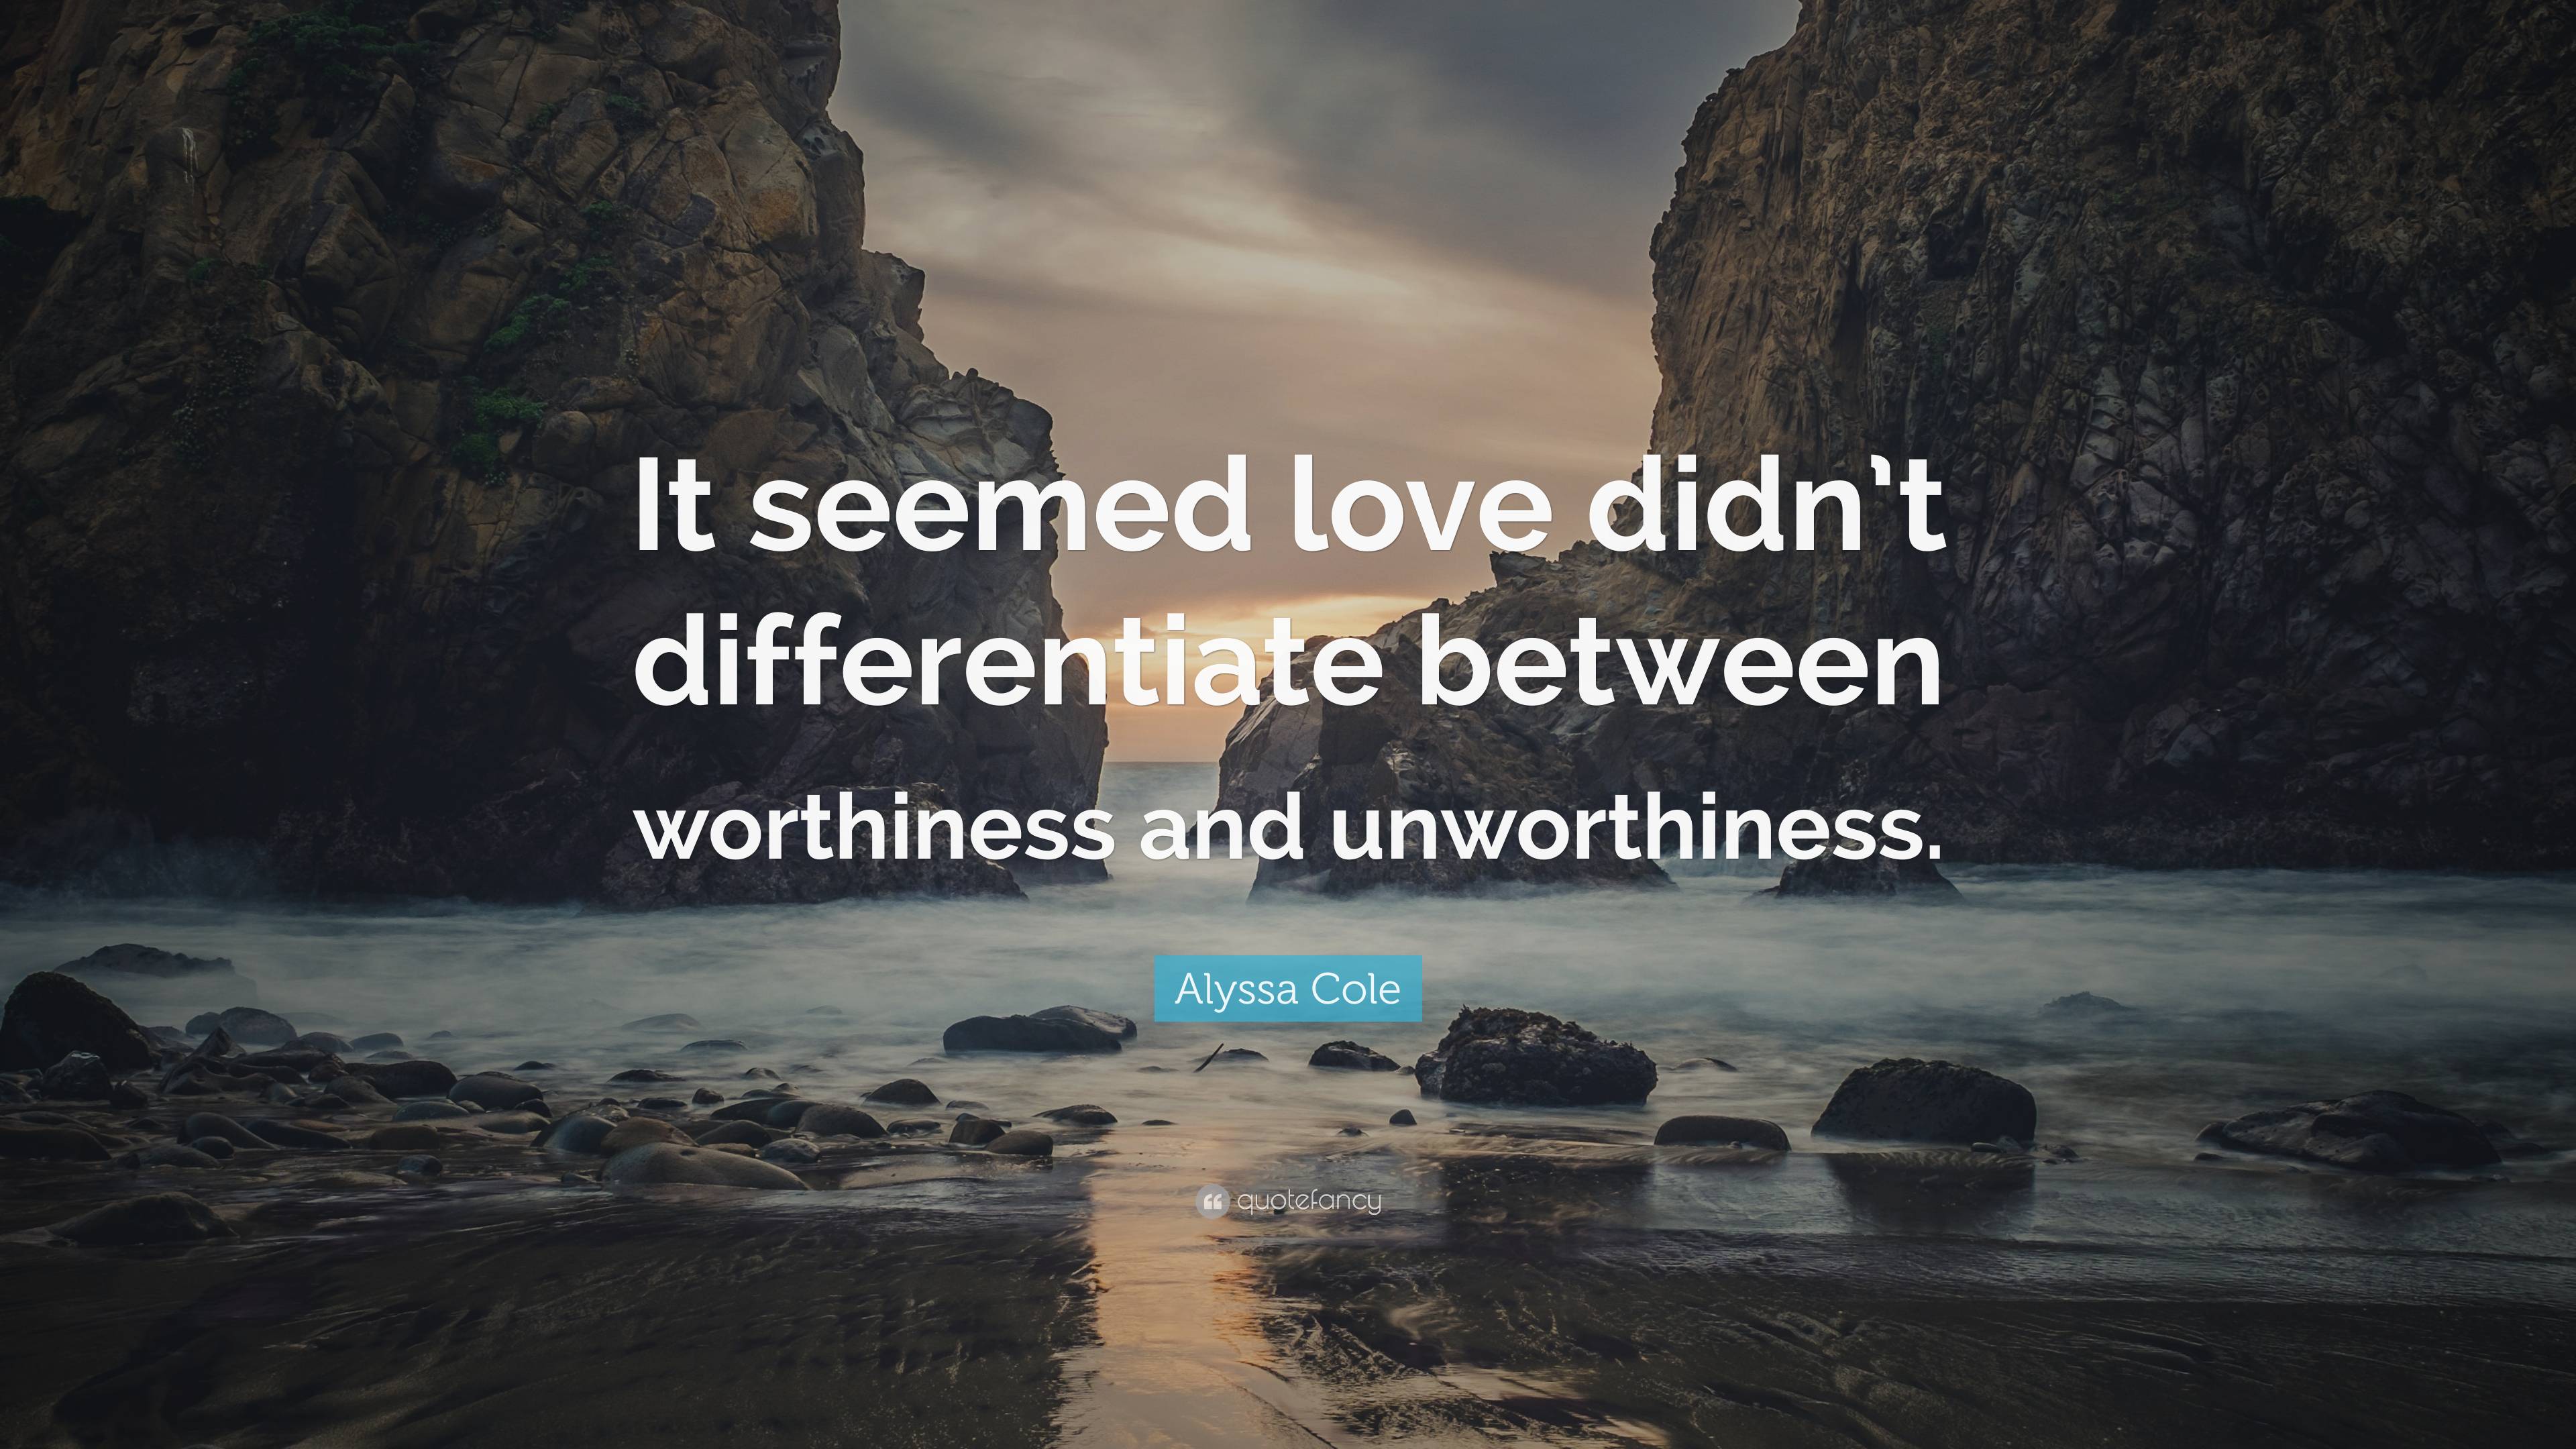 Alyssa Cole Quote: “It seemed love didn’t differentiate between ...